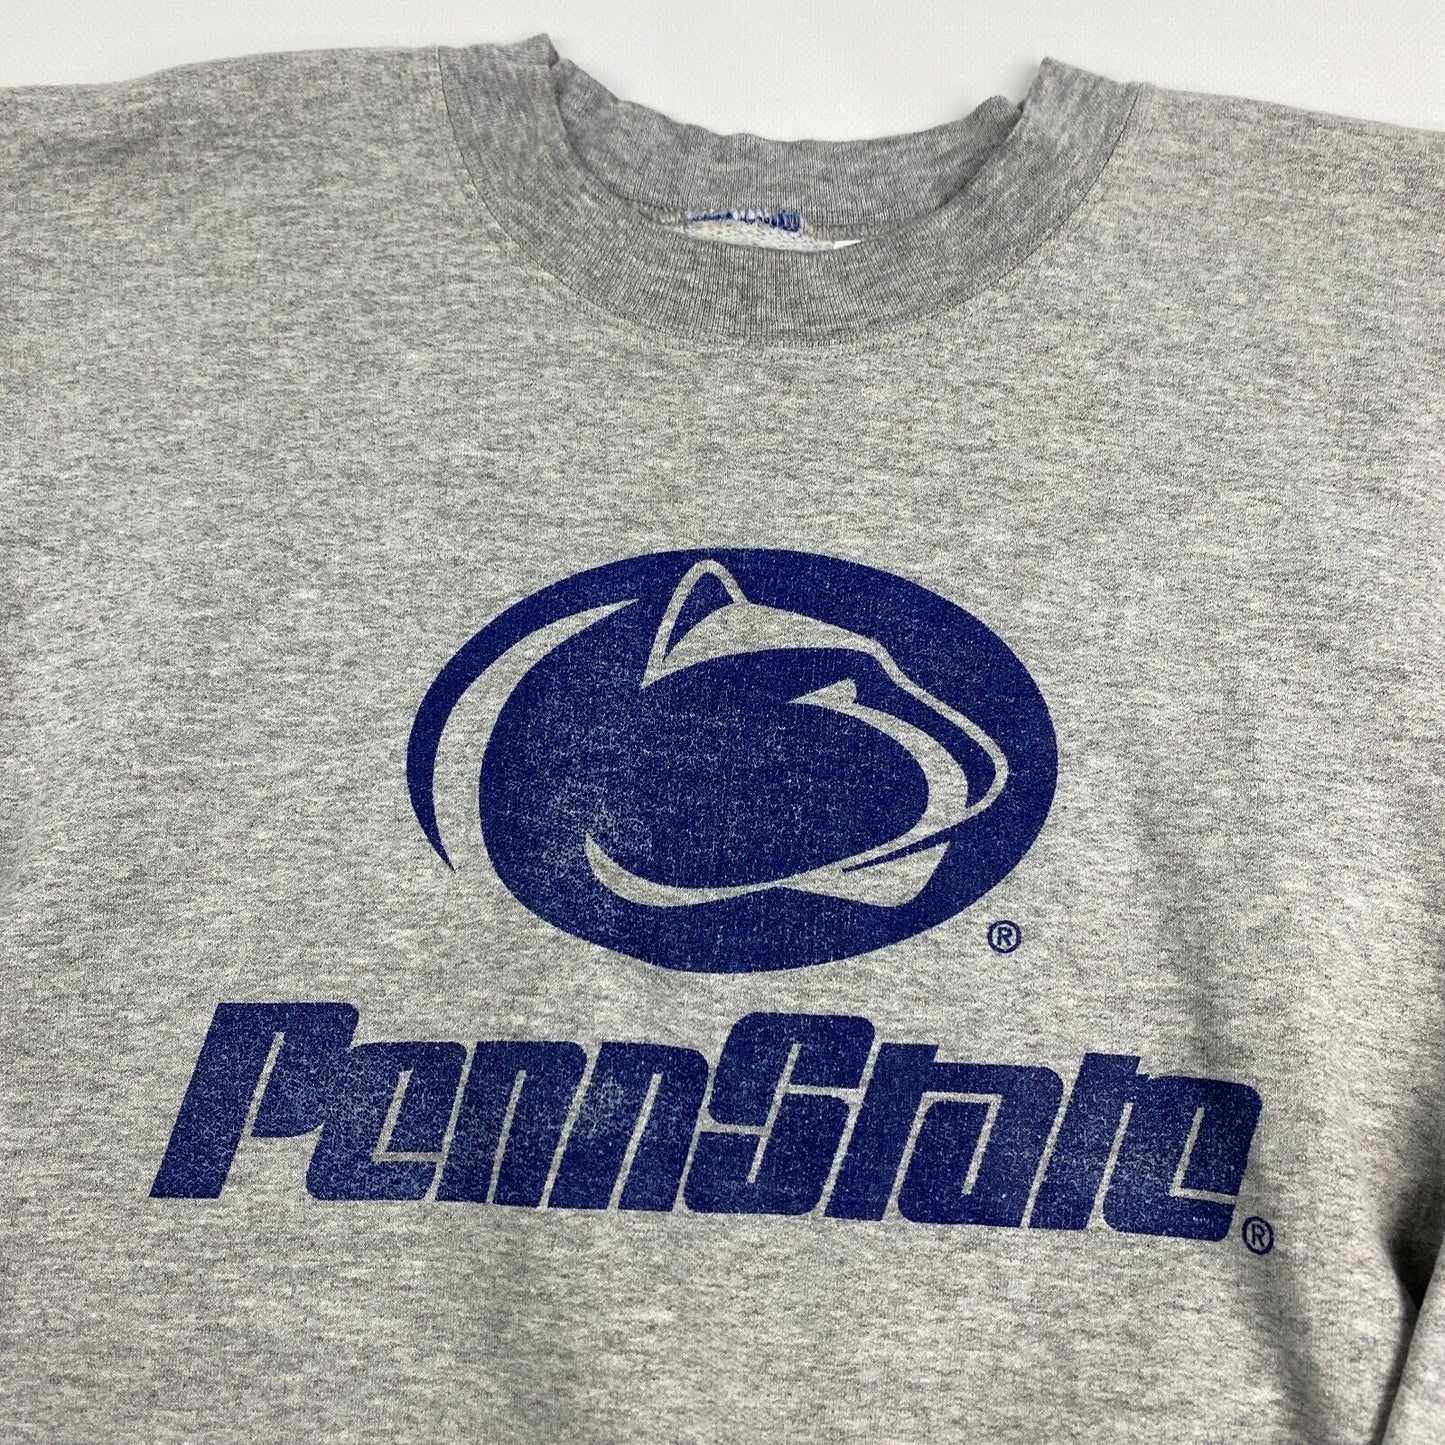 VINTAGE Penn State University Big Logo Grey Crewneck Sweater sz Small Men